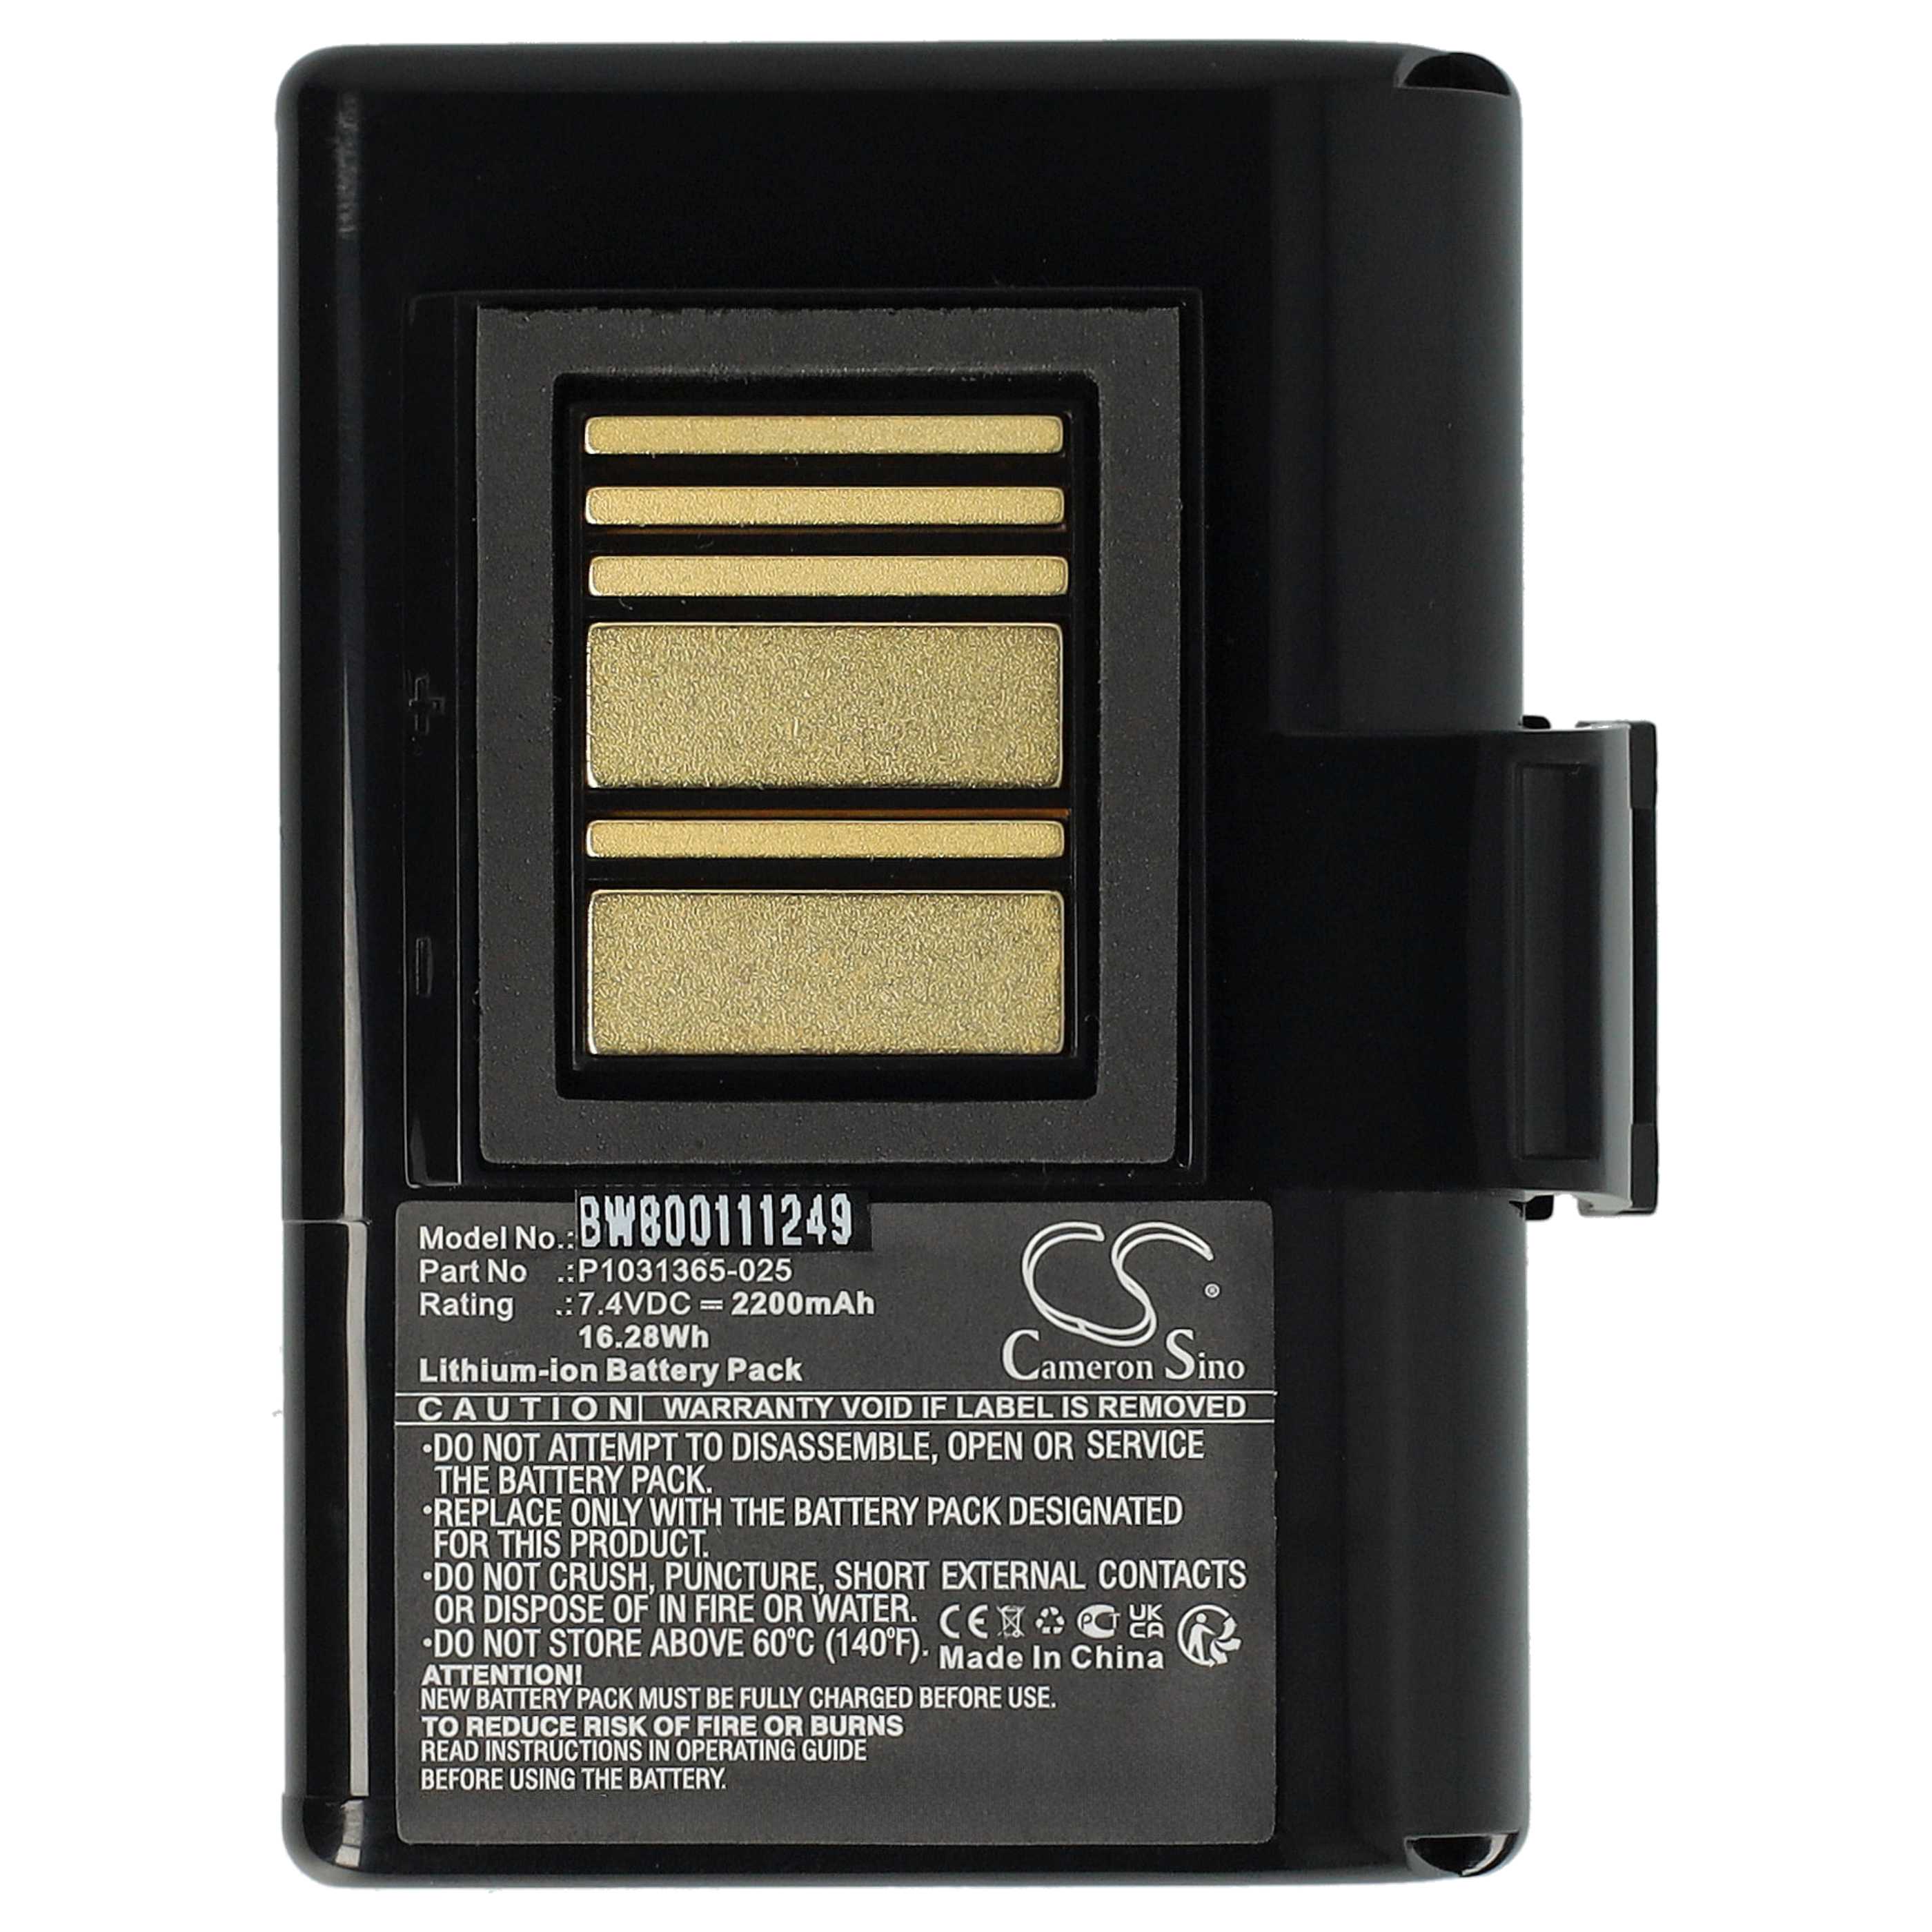 Batterie remplace Zebra AT16004, BTRY-MPP-34MA1-01, BTRY-MPP-34MAHC1-01 pour imprimante - 2200mAh 7,4V Li-ion